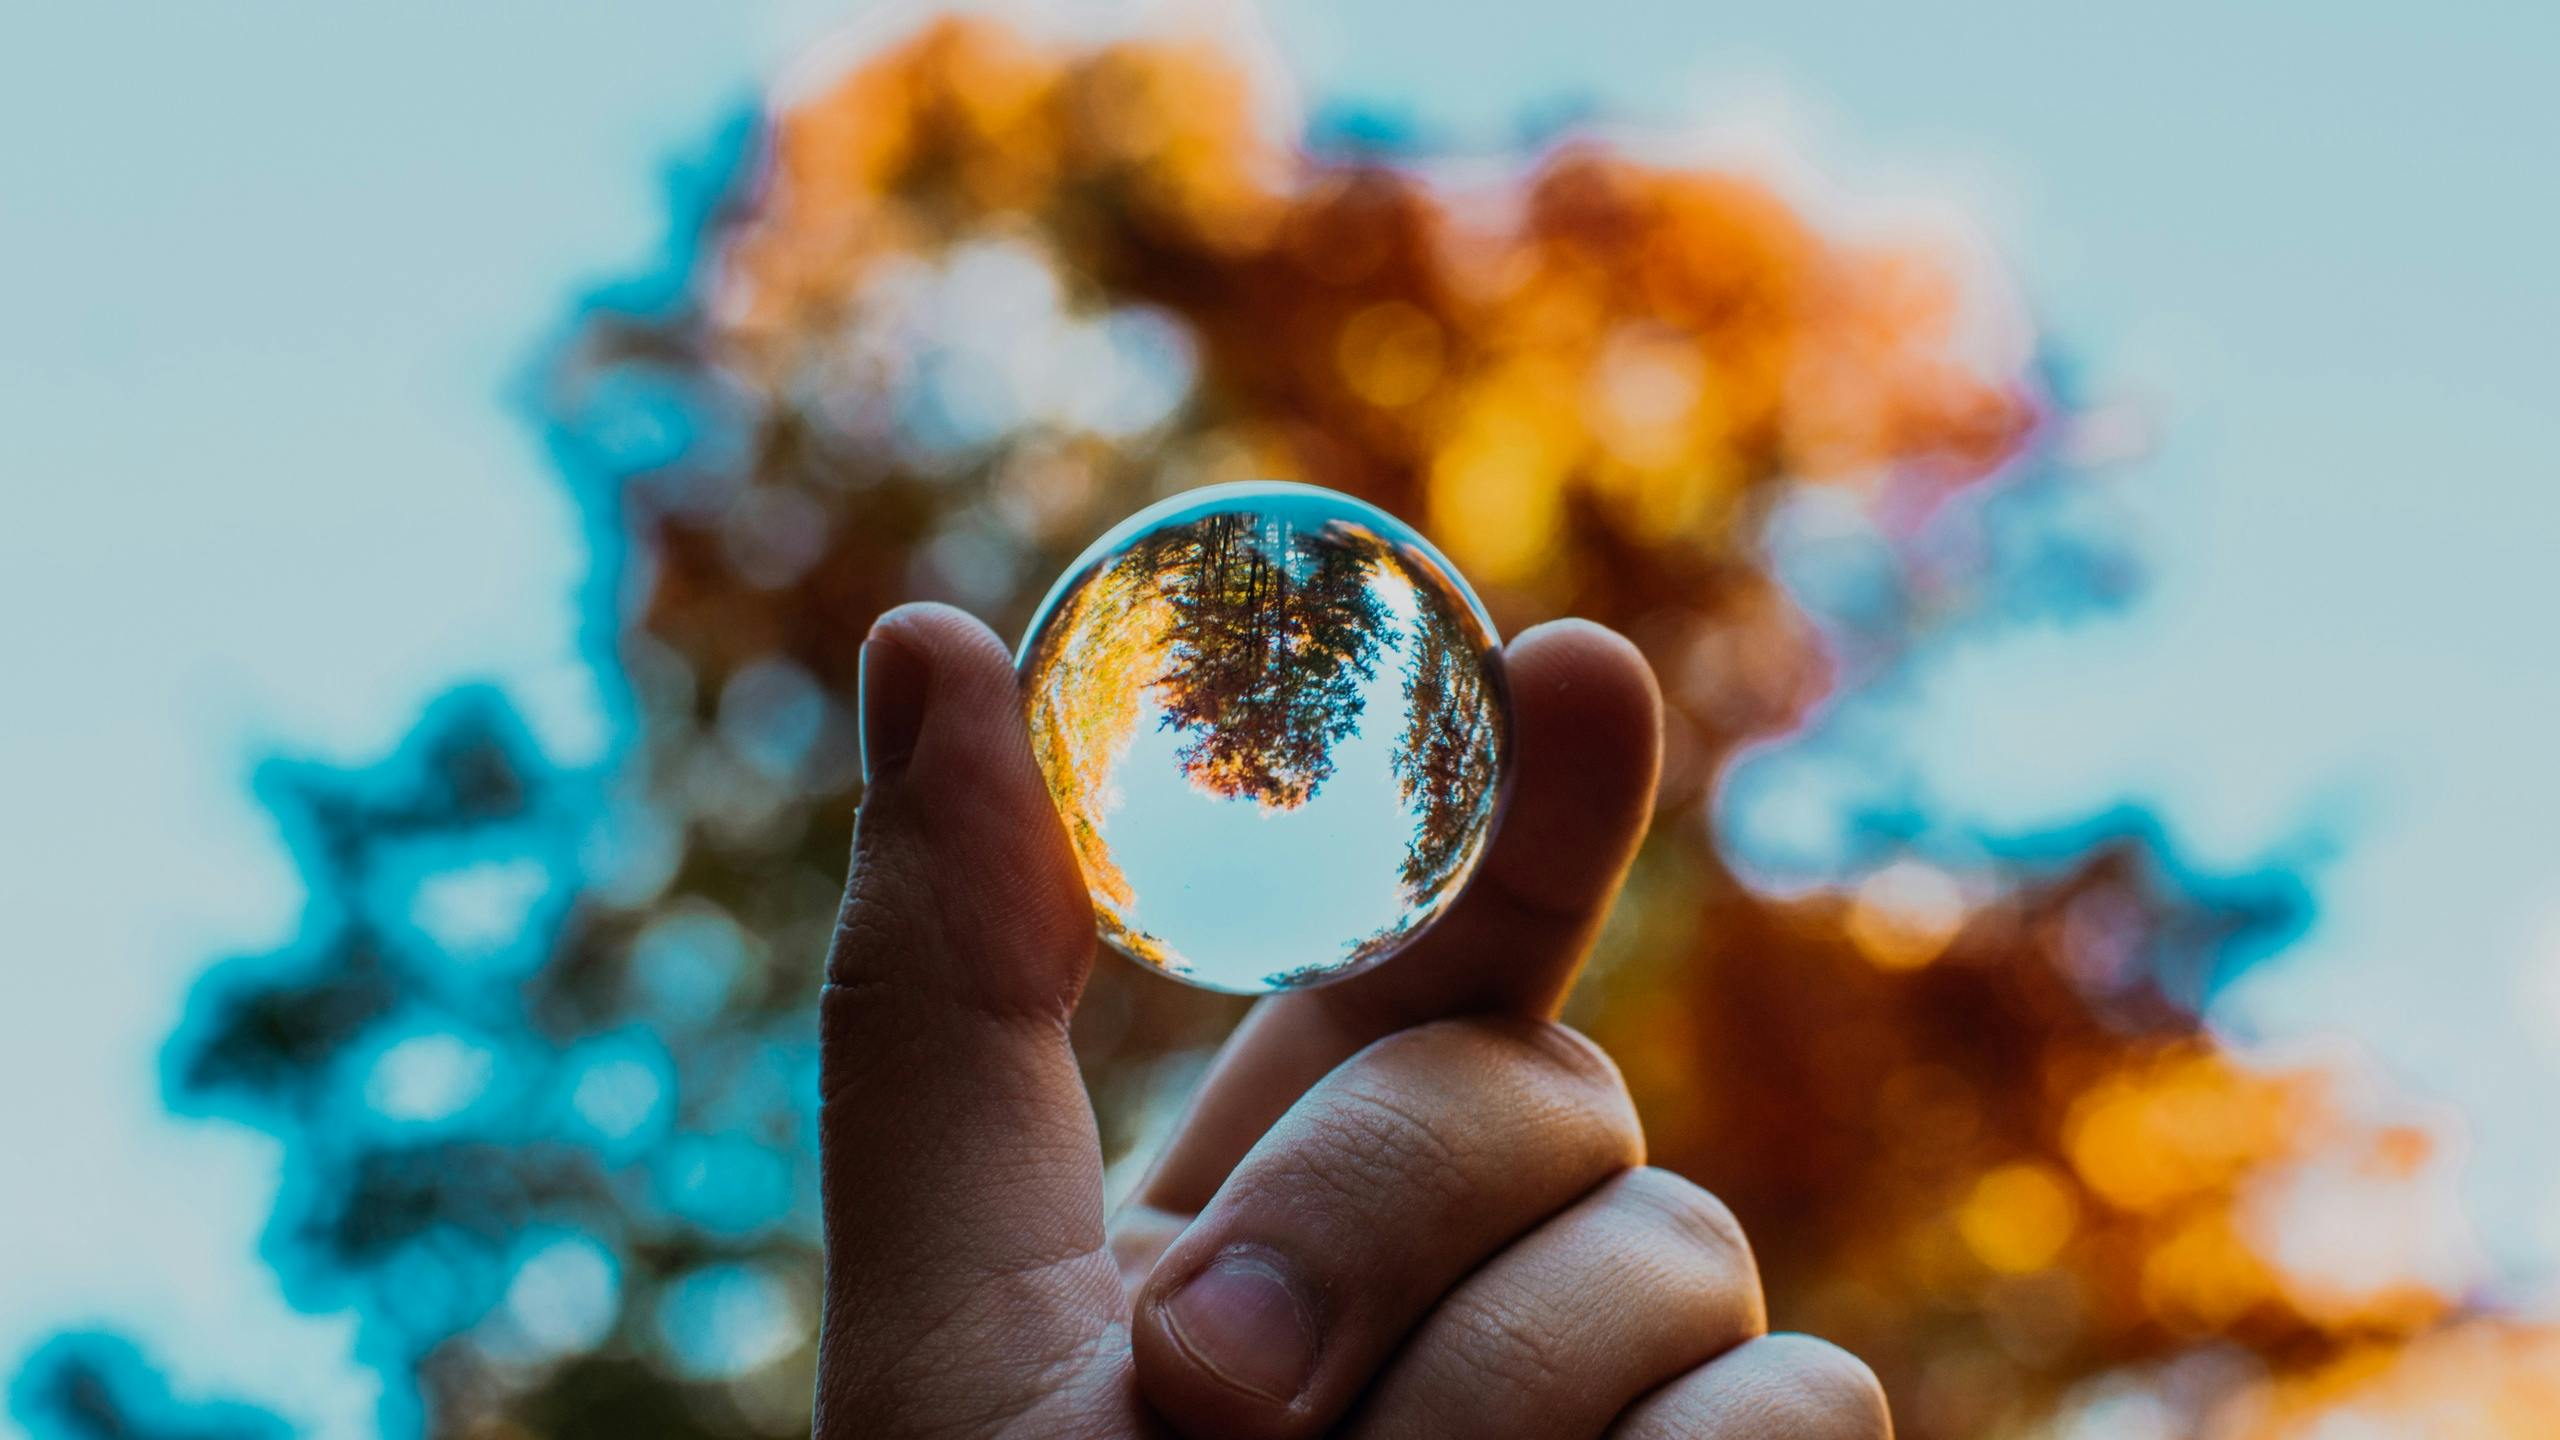 Glass ball reflecting trees